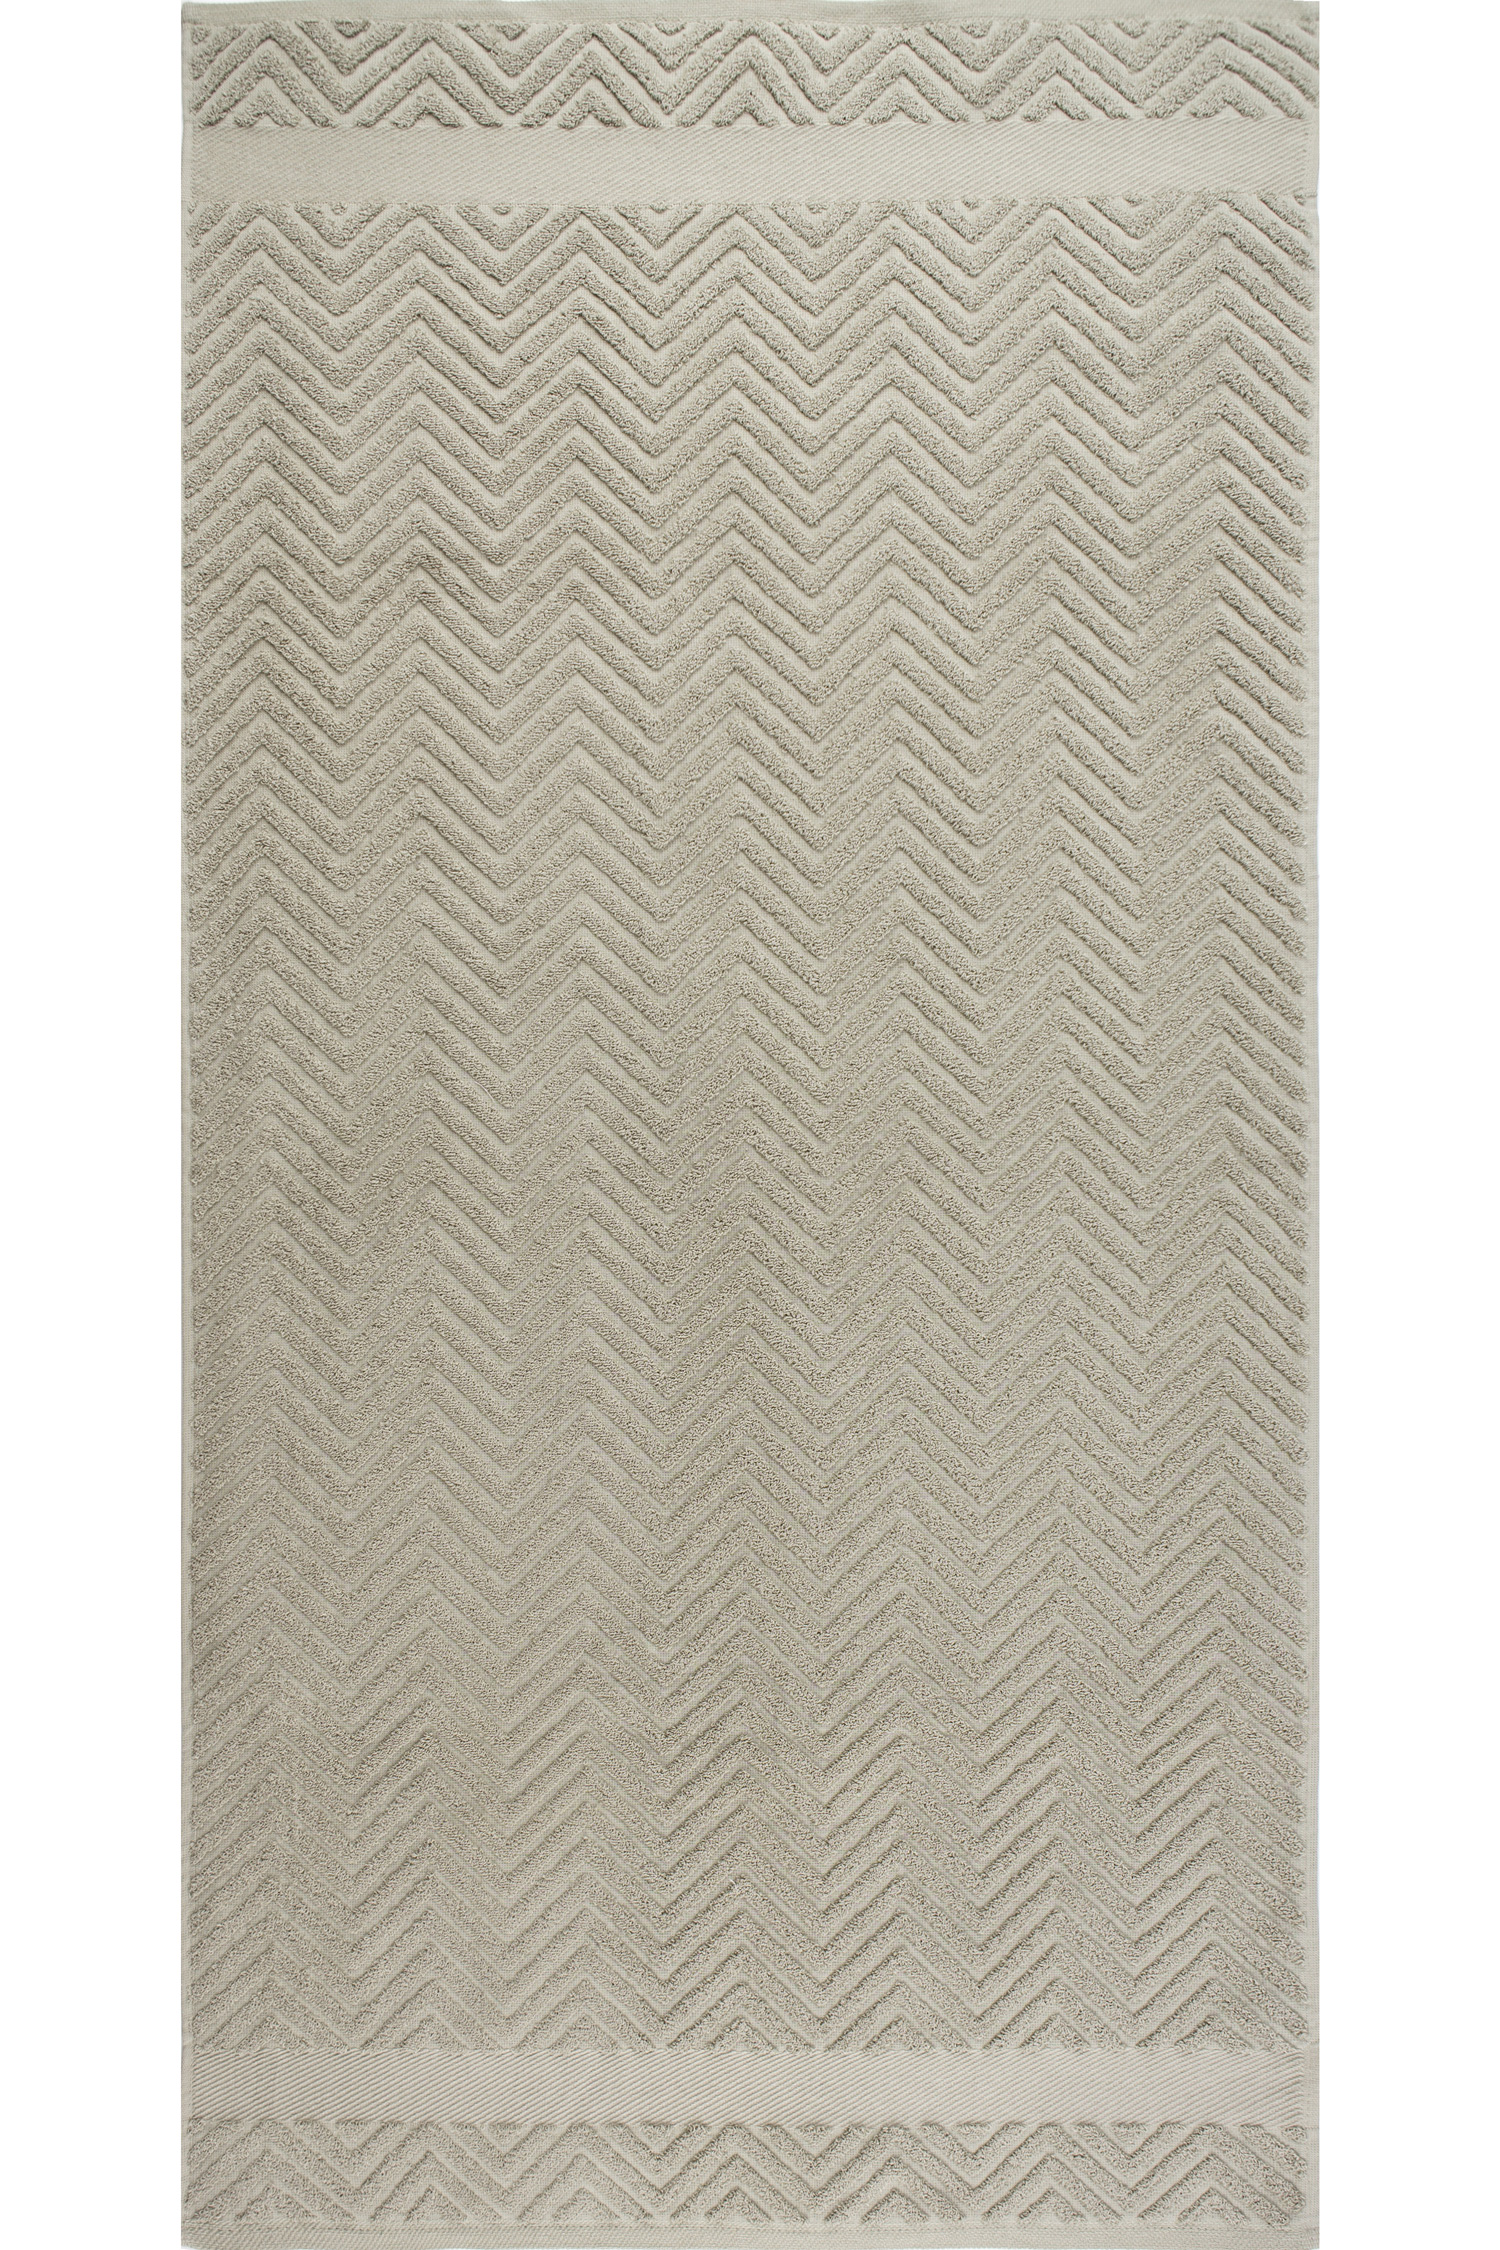 23С61-ШР/р./ст. Полотенце махровое